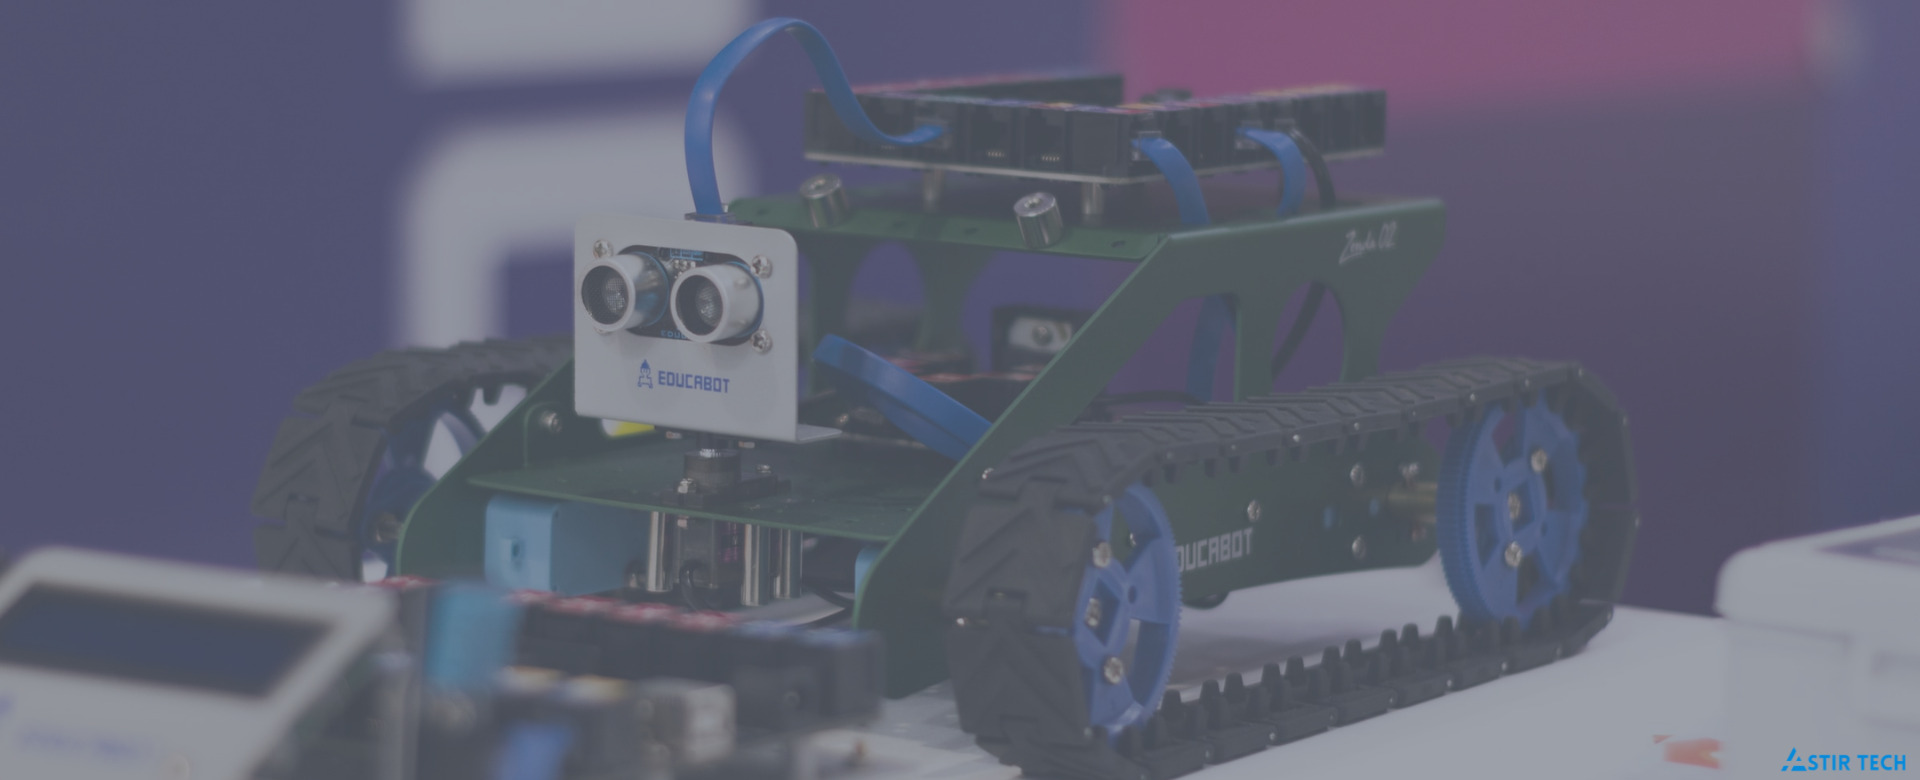 Robotic project arduino robot